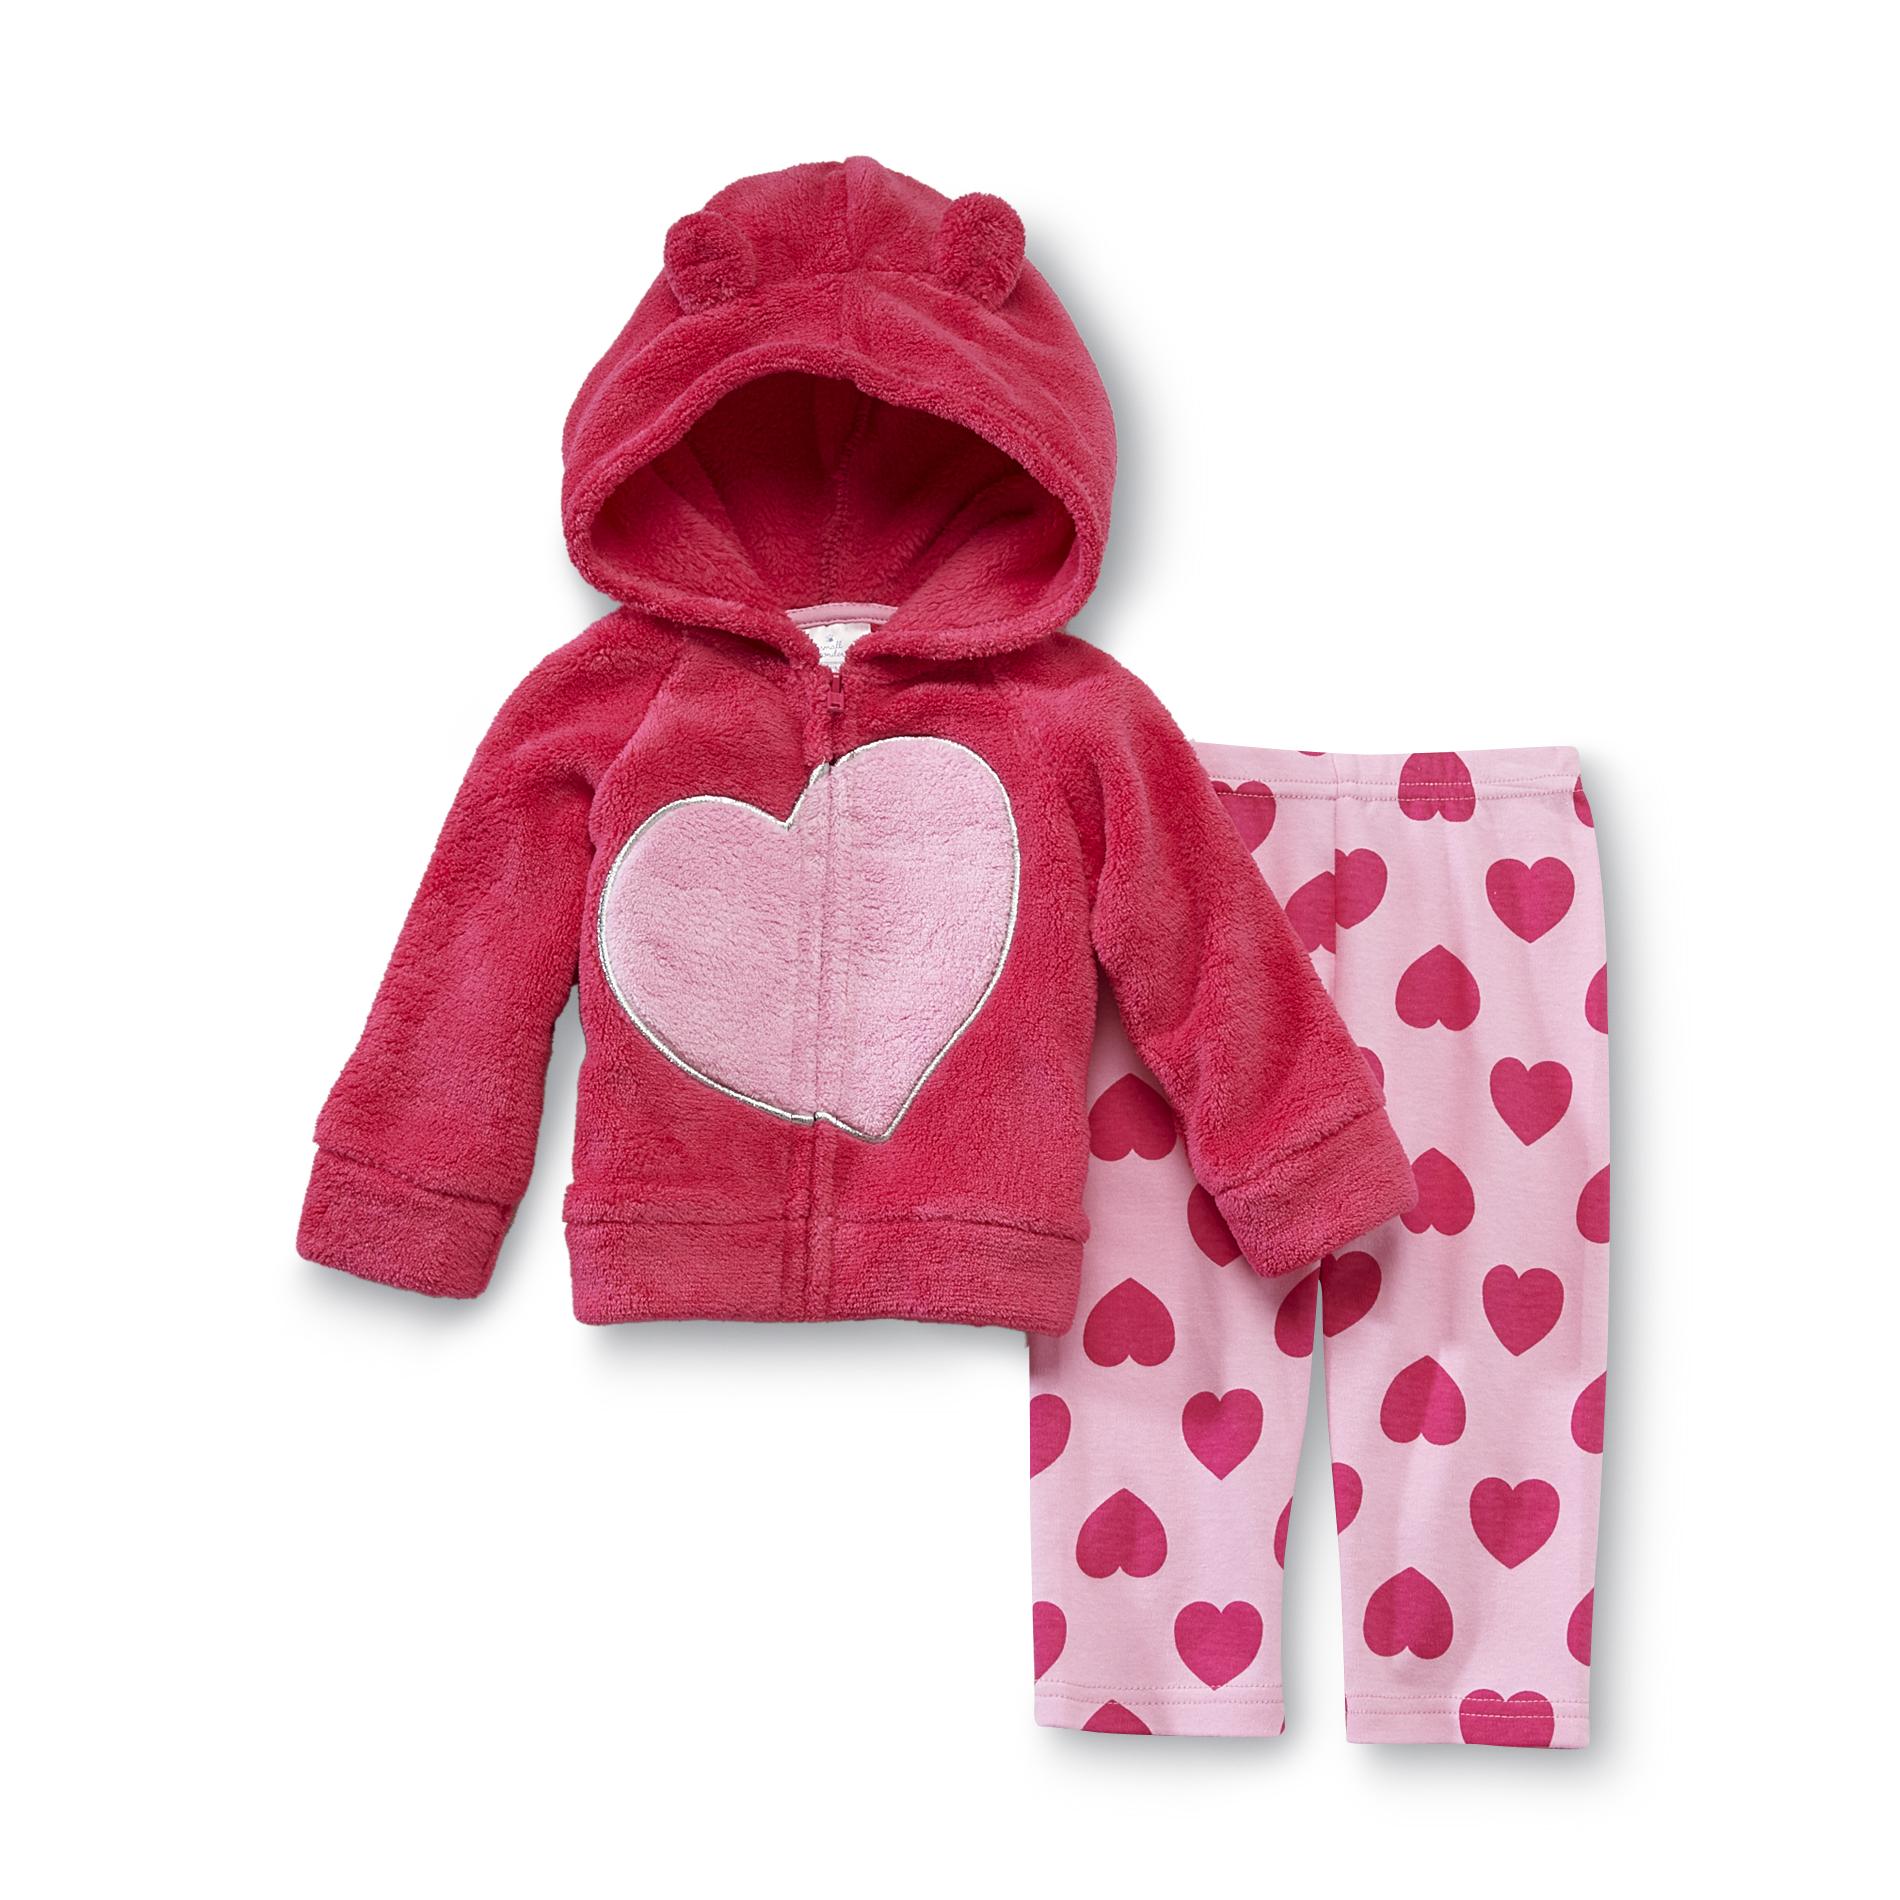 Small Wonders Infant Girl's Plush Jacket & Cotton Pants - Heart